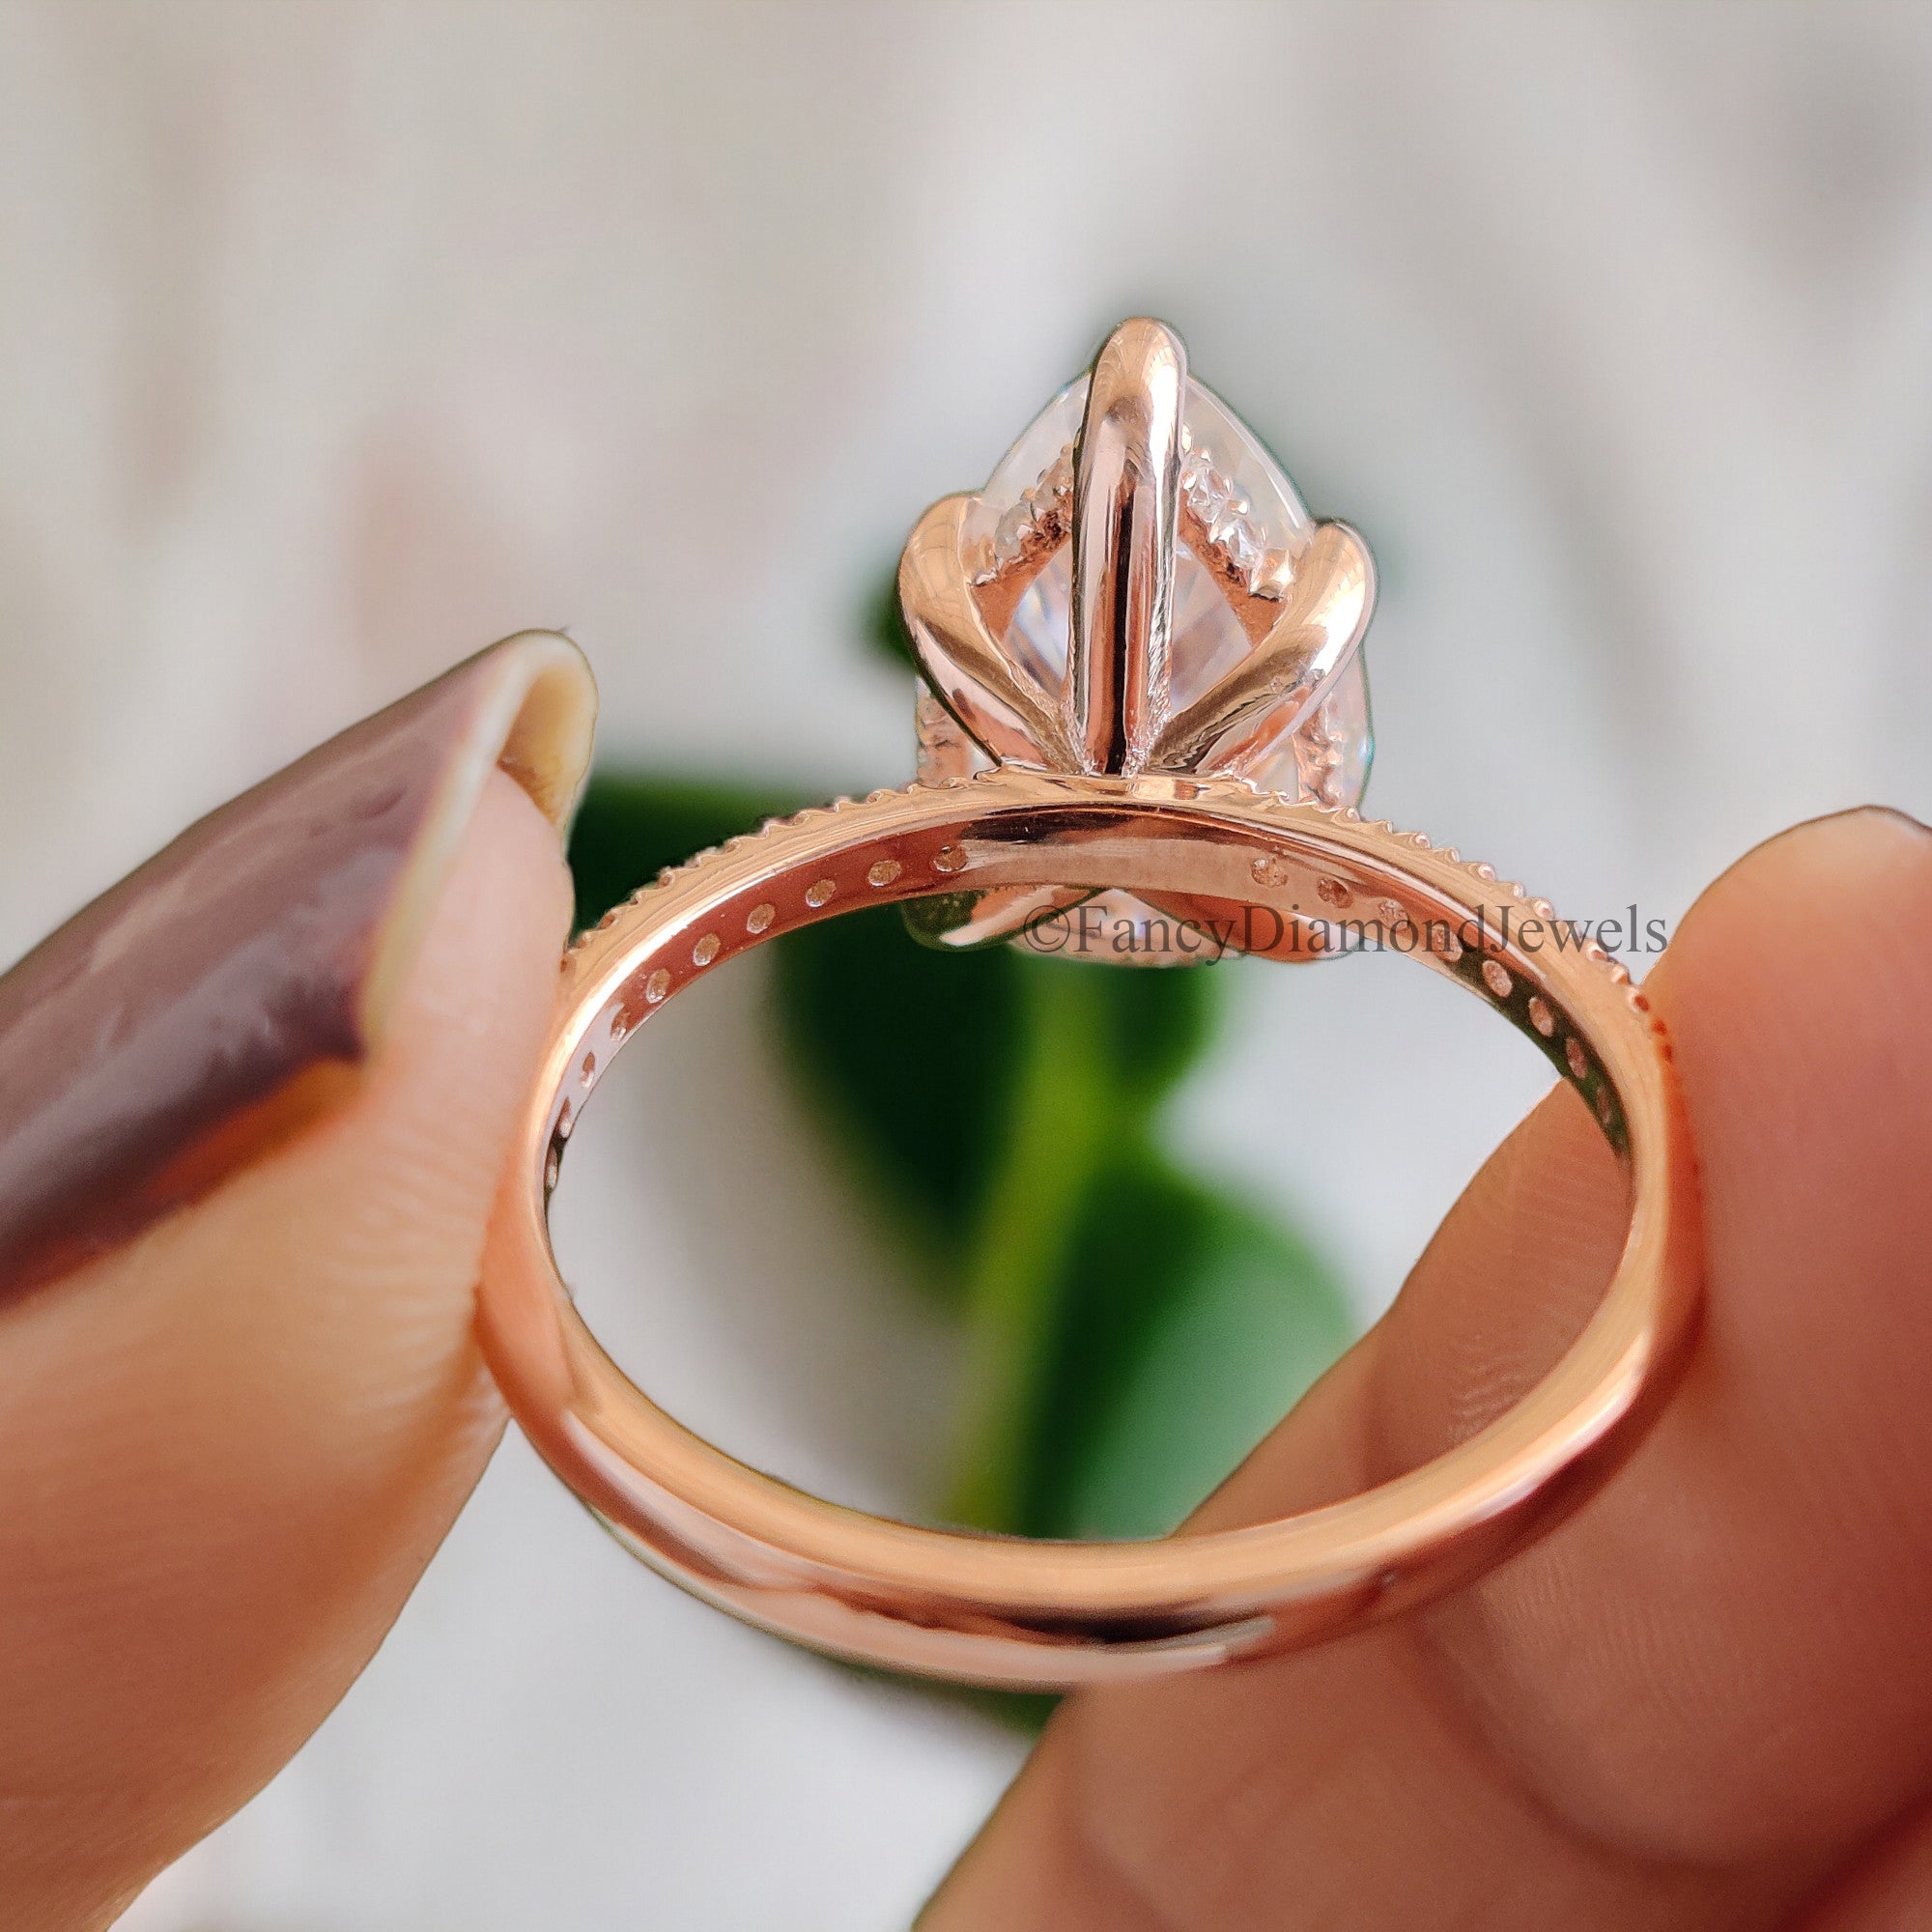 3.0 CT Pear Cut Moissanite Engagement Ring Anniversary Gift Hidden Halo 10K/14K/18K White Gold Pave Setting Ring Christmas Gift For Her FD17